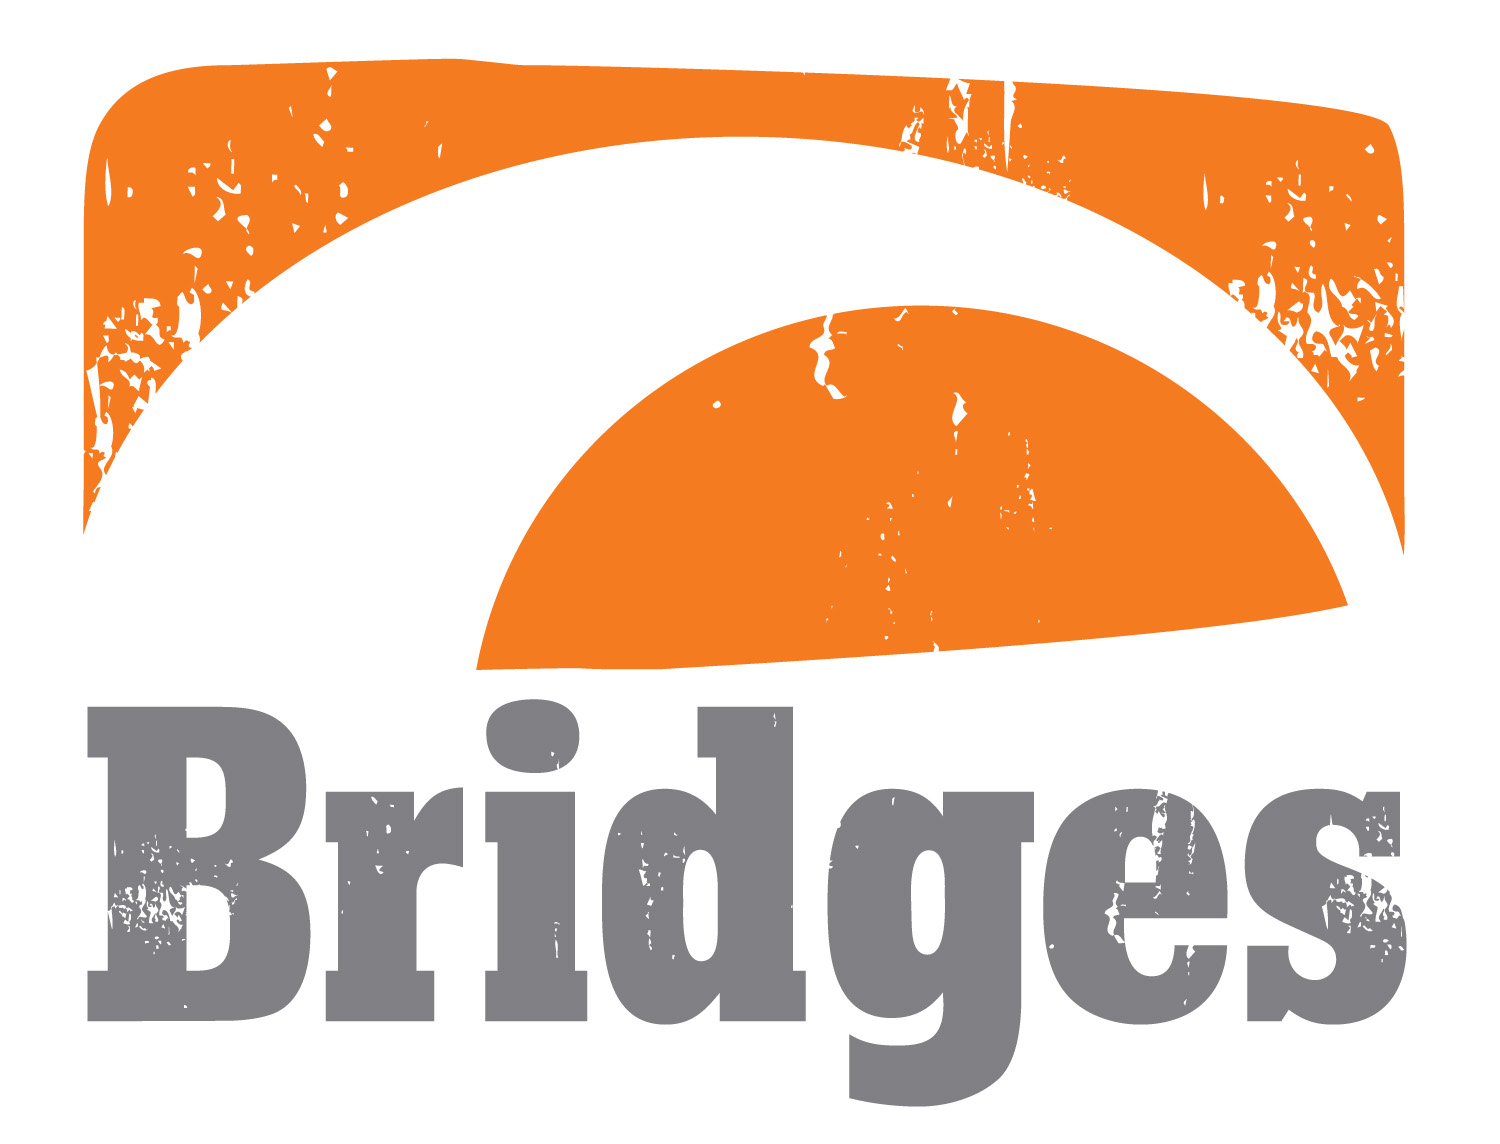 bridges logo